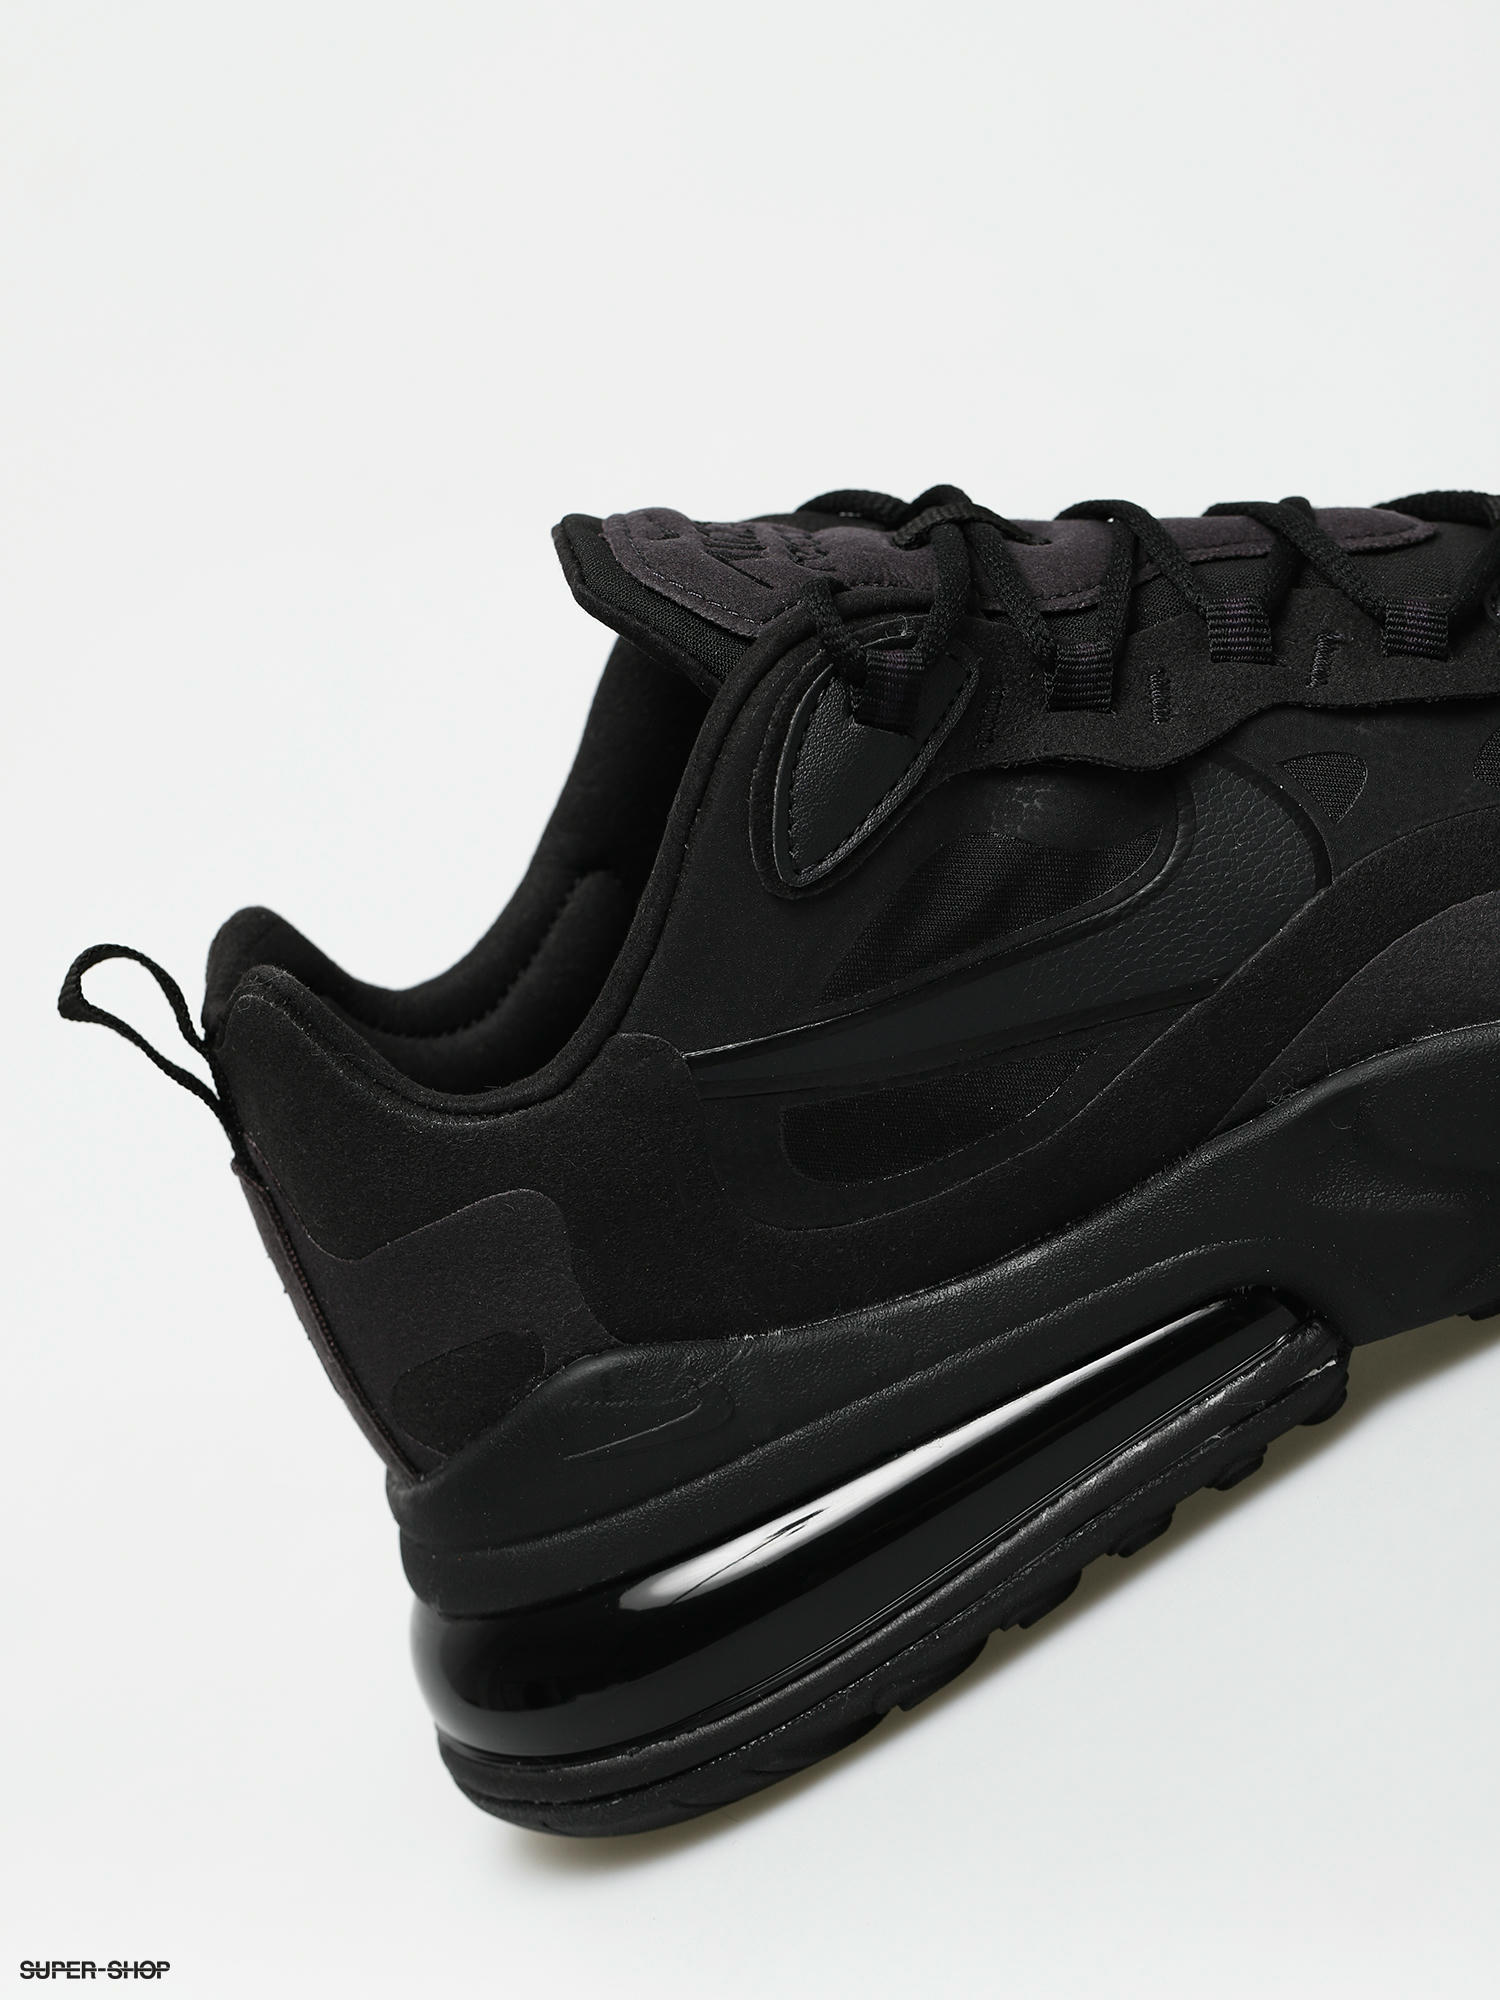 Nike Air Max 270 React Shoes Black Oil Grey Oil Grey Black